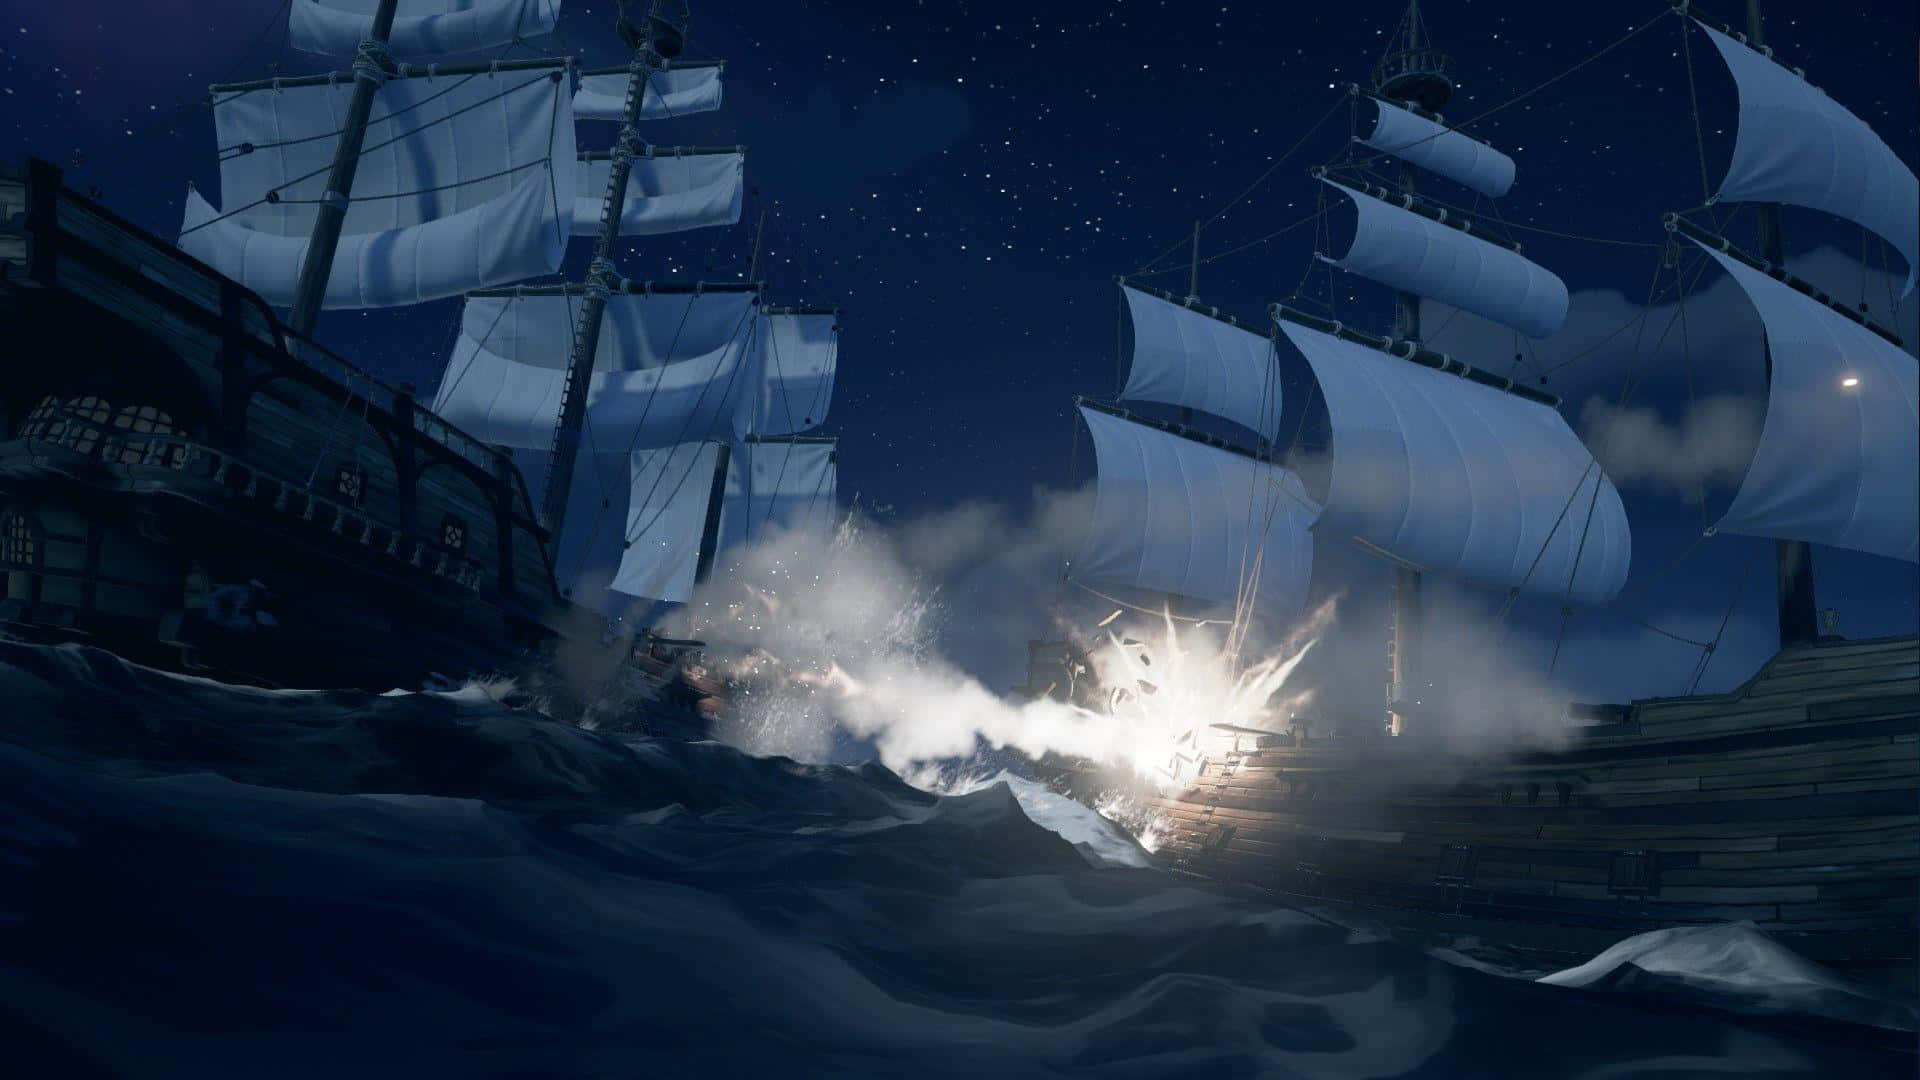 Illuminated High Seas Adventure - Sea of Thieves Background.